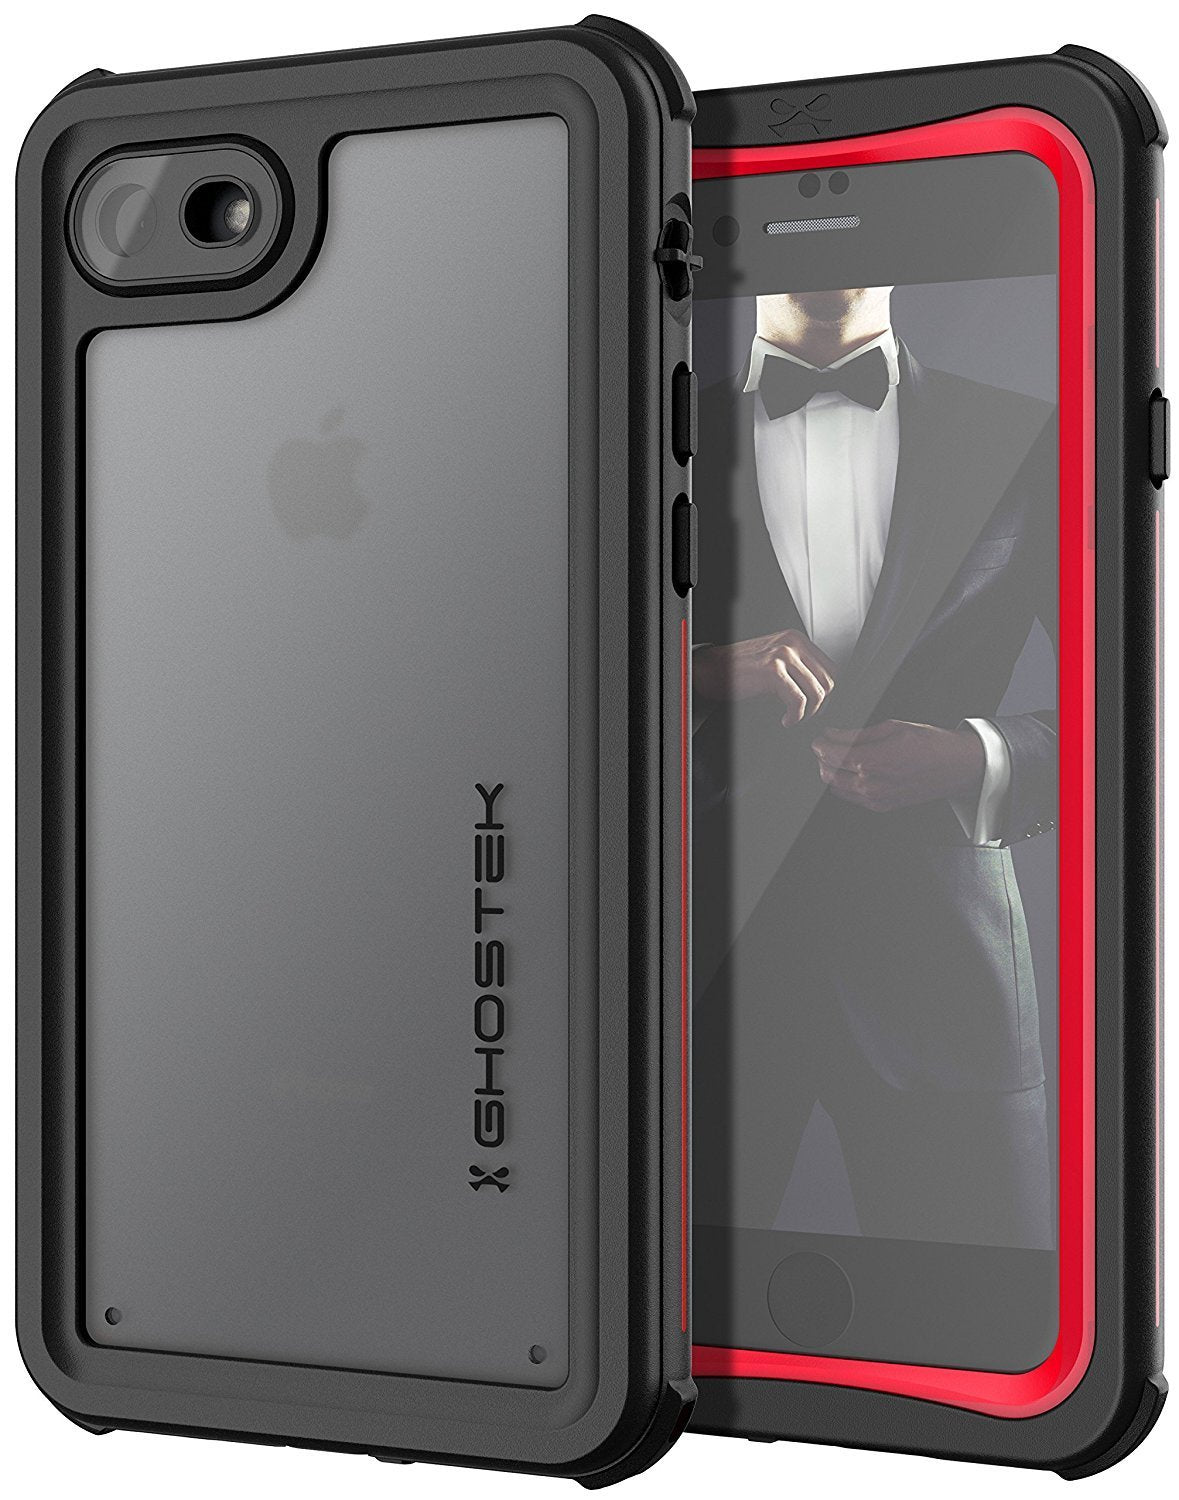 iPhone  7  Waterproof Case, Ghostek Nautical Series for iPhone  7  | Slim Underwater Protection | Adventure Duty | Ultra Fit | Swimming (Red)